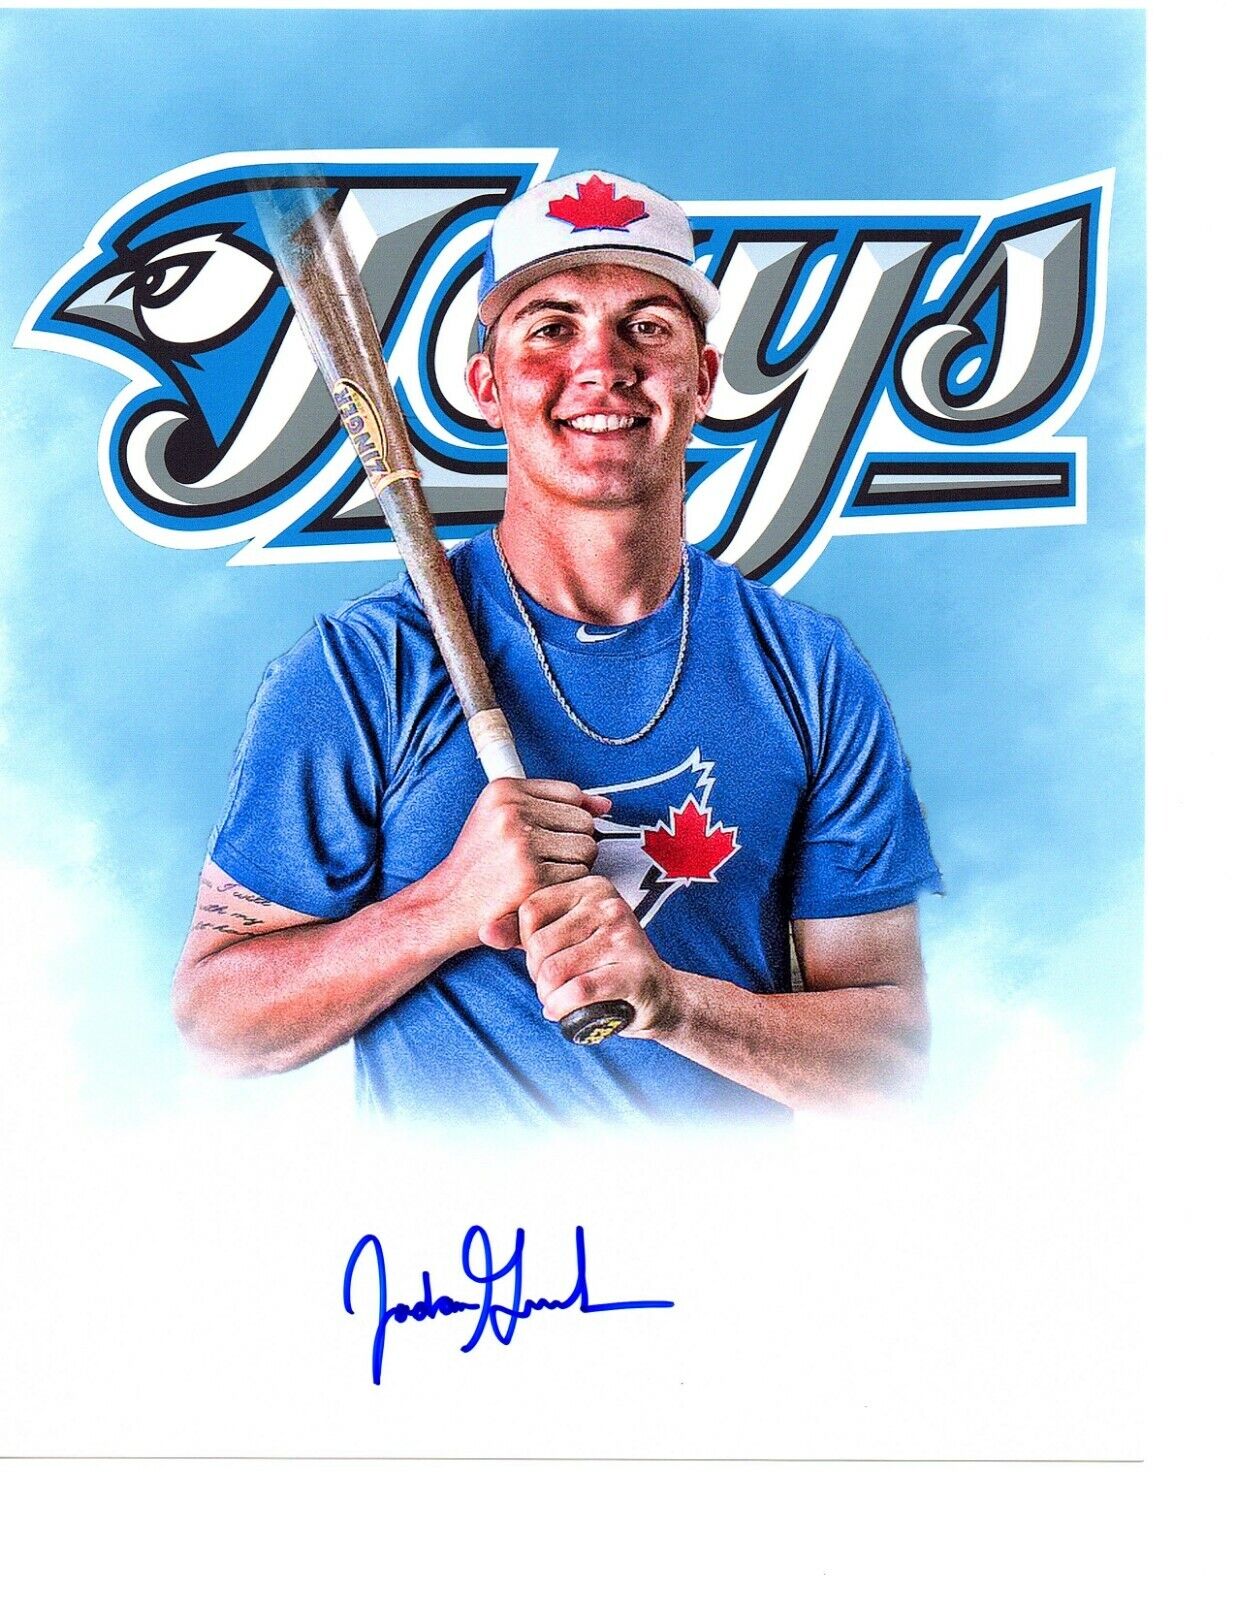 Jordan Groshans signed 8x10 Photo Poster painting autograph Toronto Blue Jays Prospect baseball*